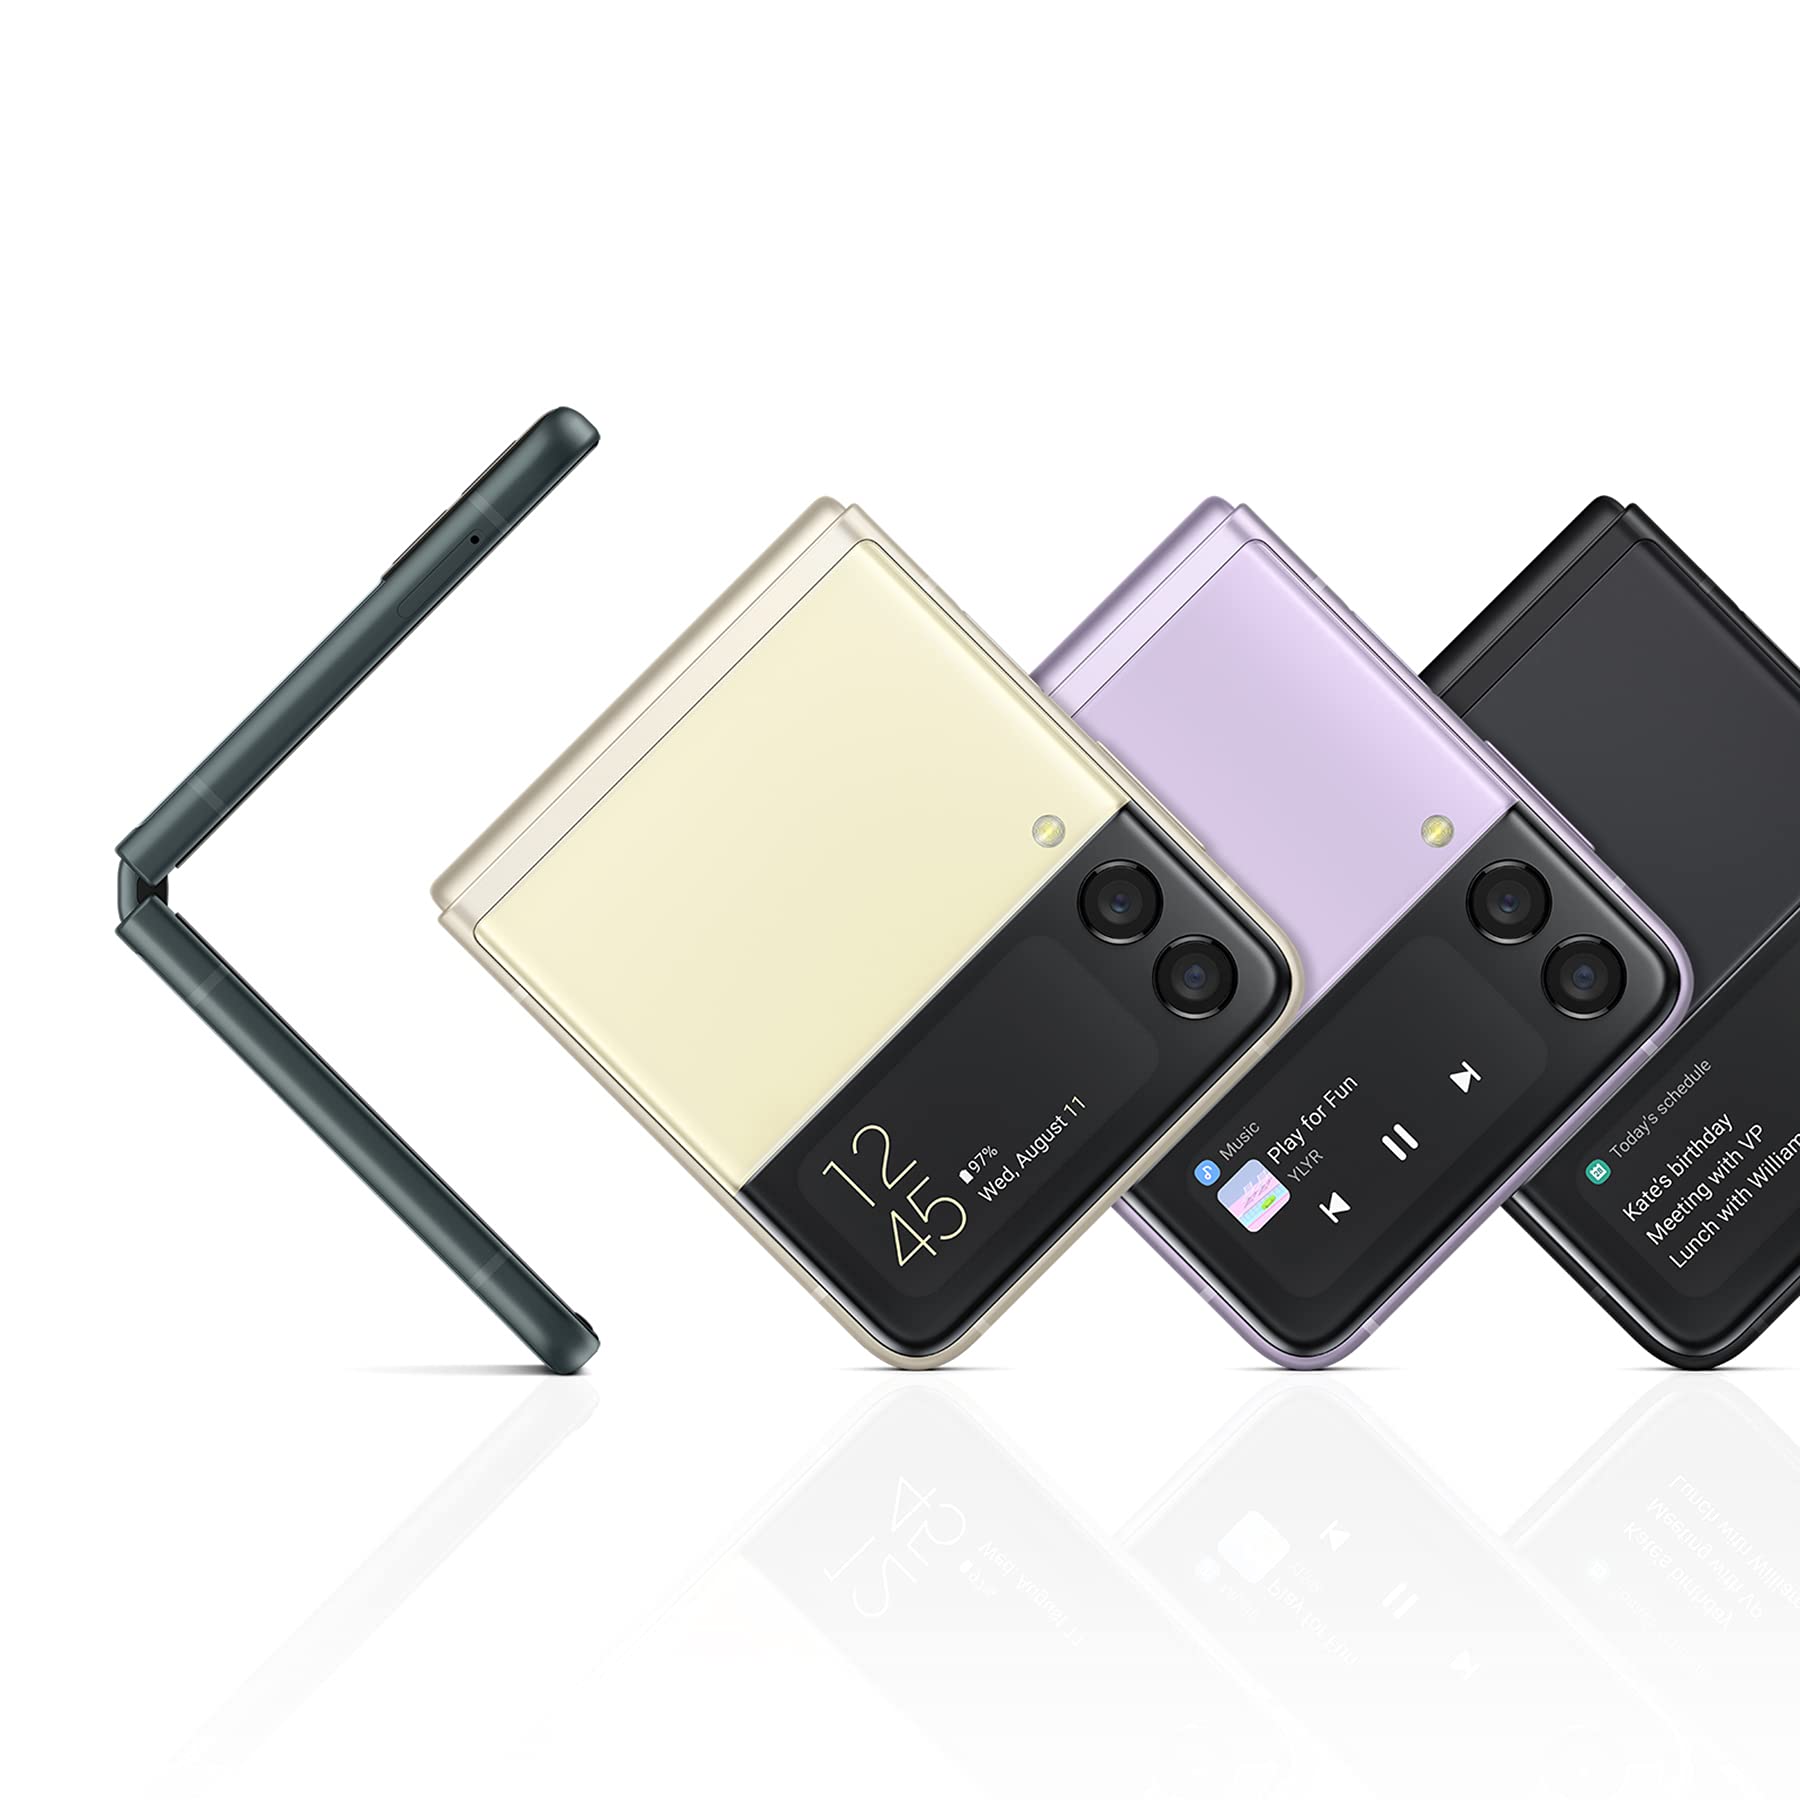 SAMSUNG Galaxy Z Flip 3 5G Cell Phone, Factory Unlocked Android Smartphone, 128GB, Flex Mode, Super Steady Camera, Ultra Compact, US Version, Phantom Black